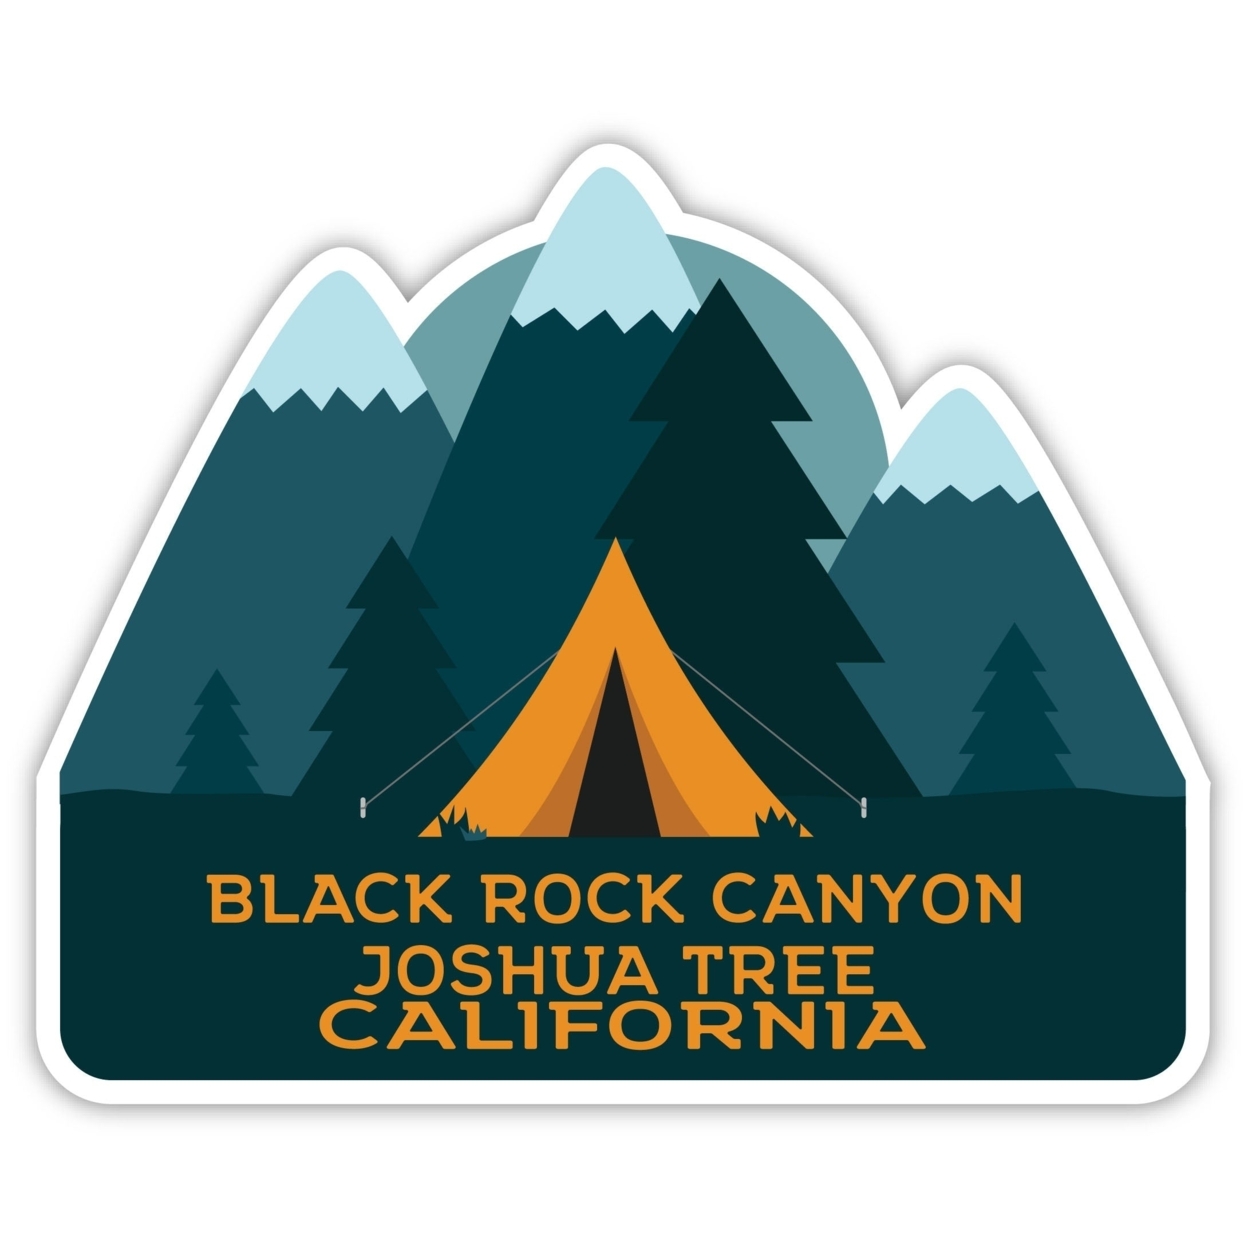 Black Rock Canyon Joshua Tree California Souvenir Decorative Stickers (Choose Theme And Size) - Single Unit, 6-Inch, Tent